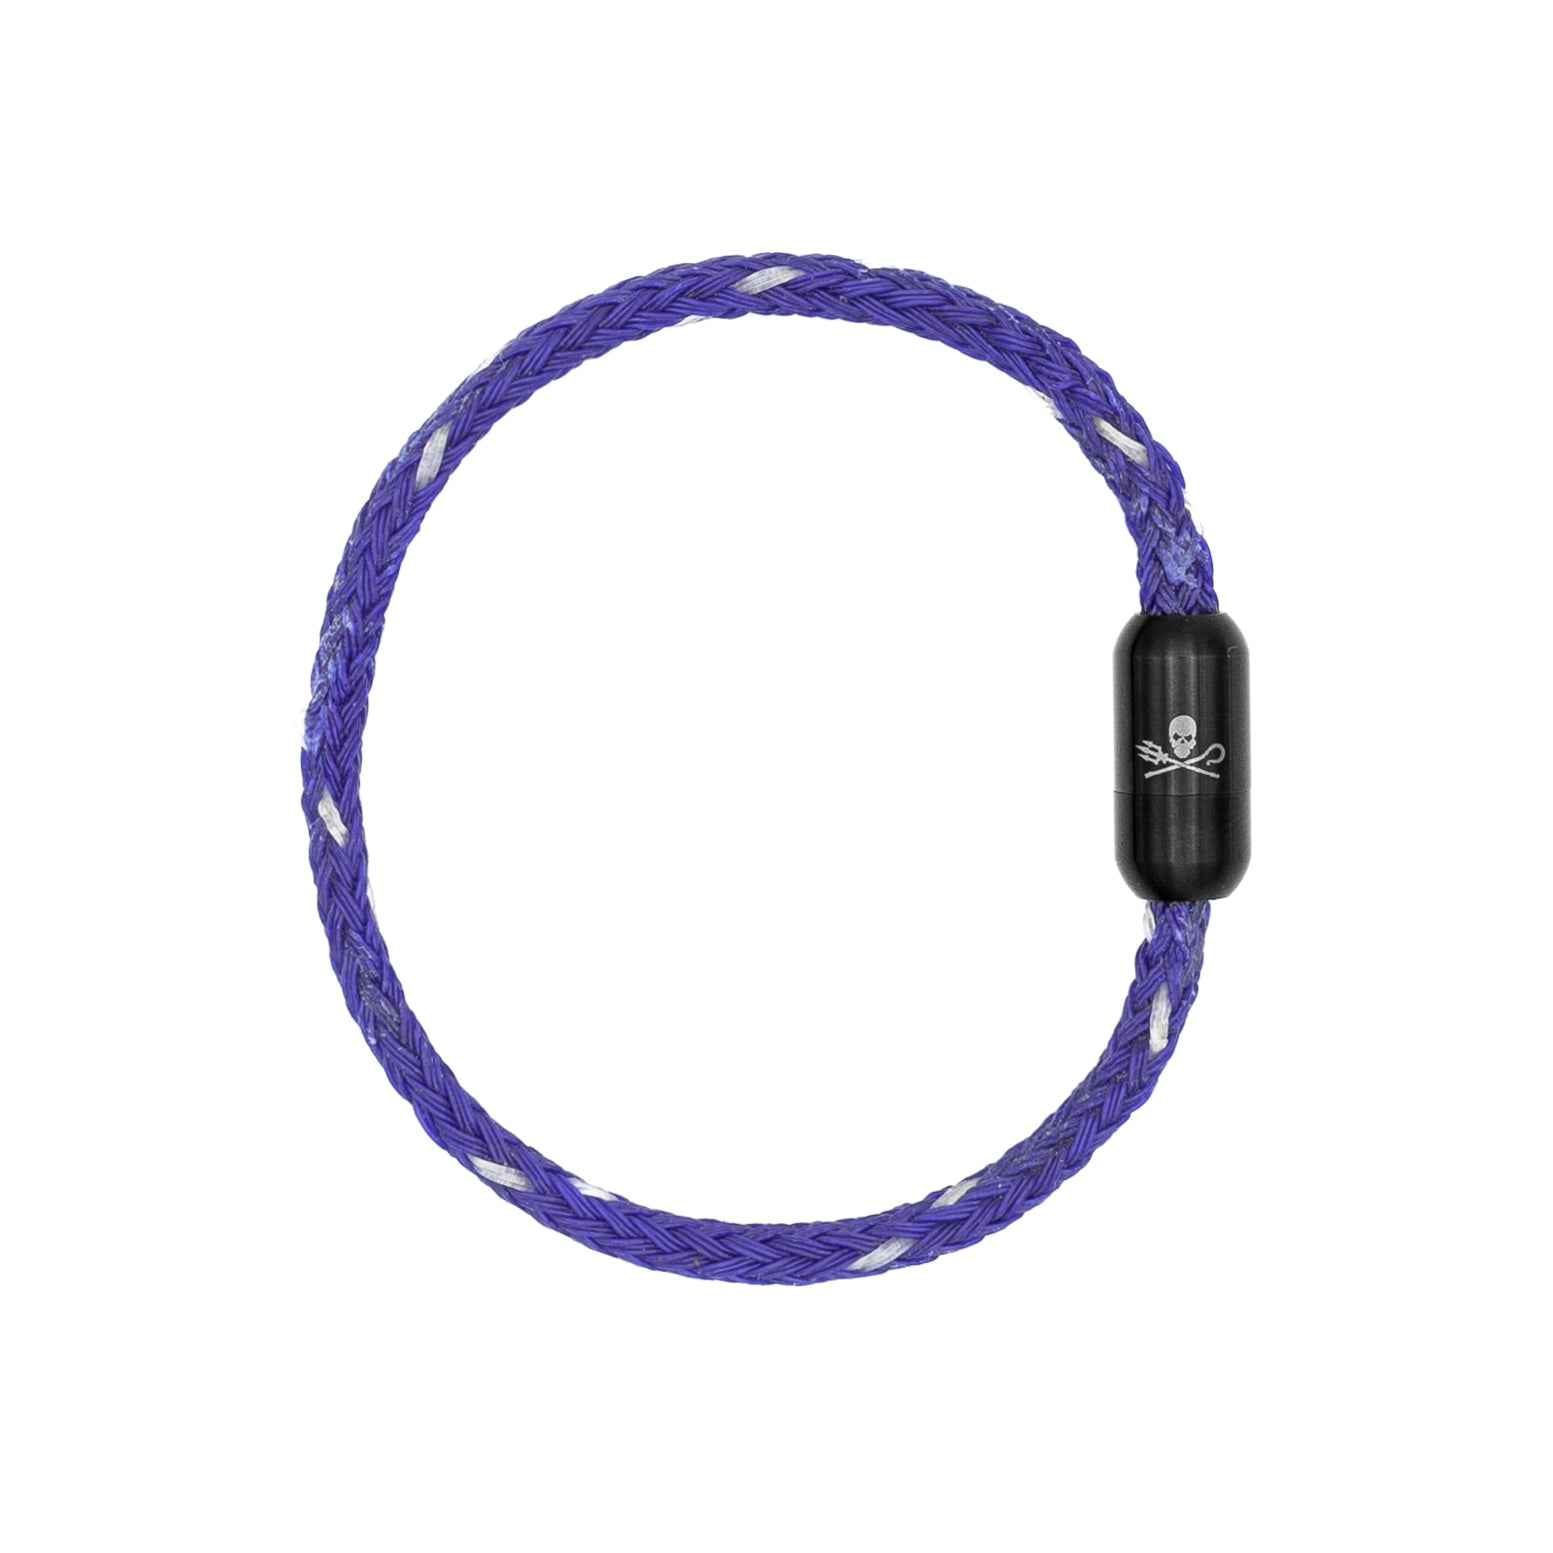 Bracelet in color violet with black clasp by Bracenet